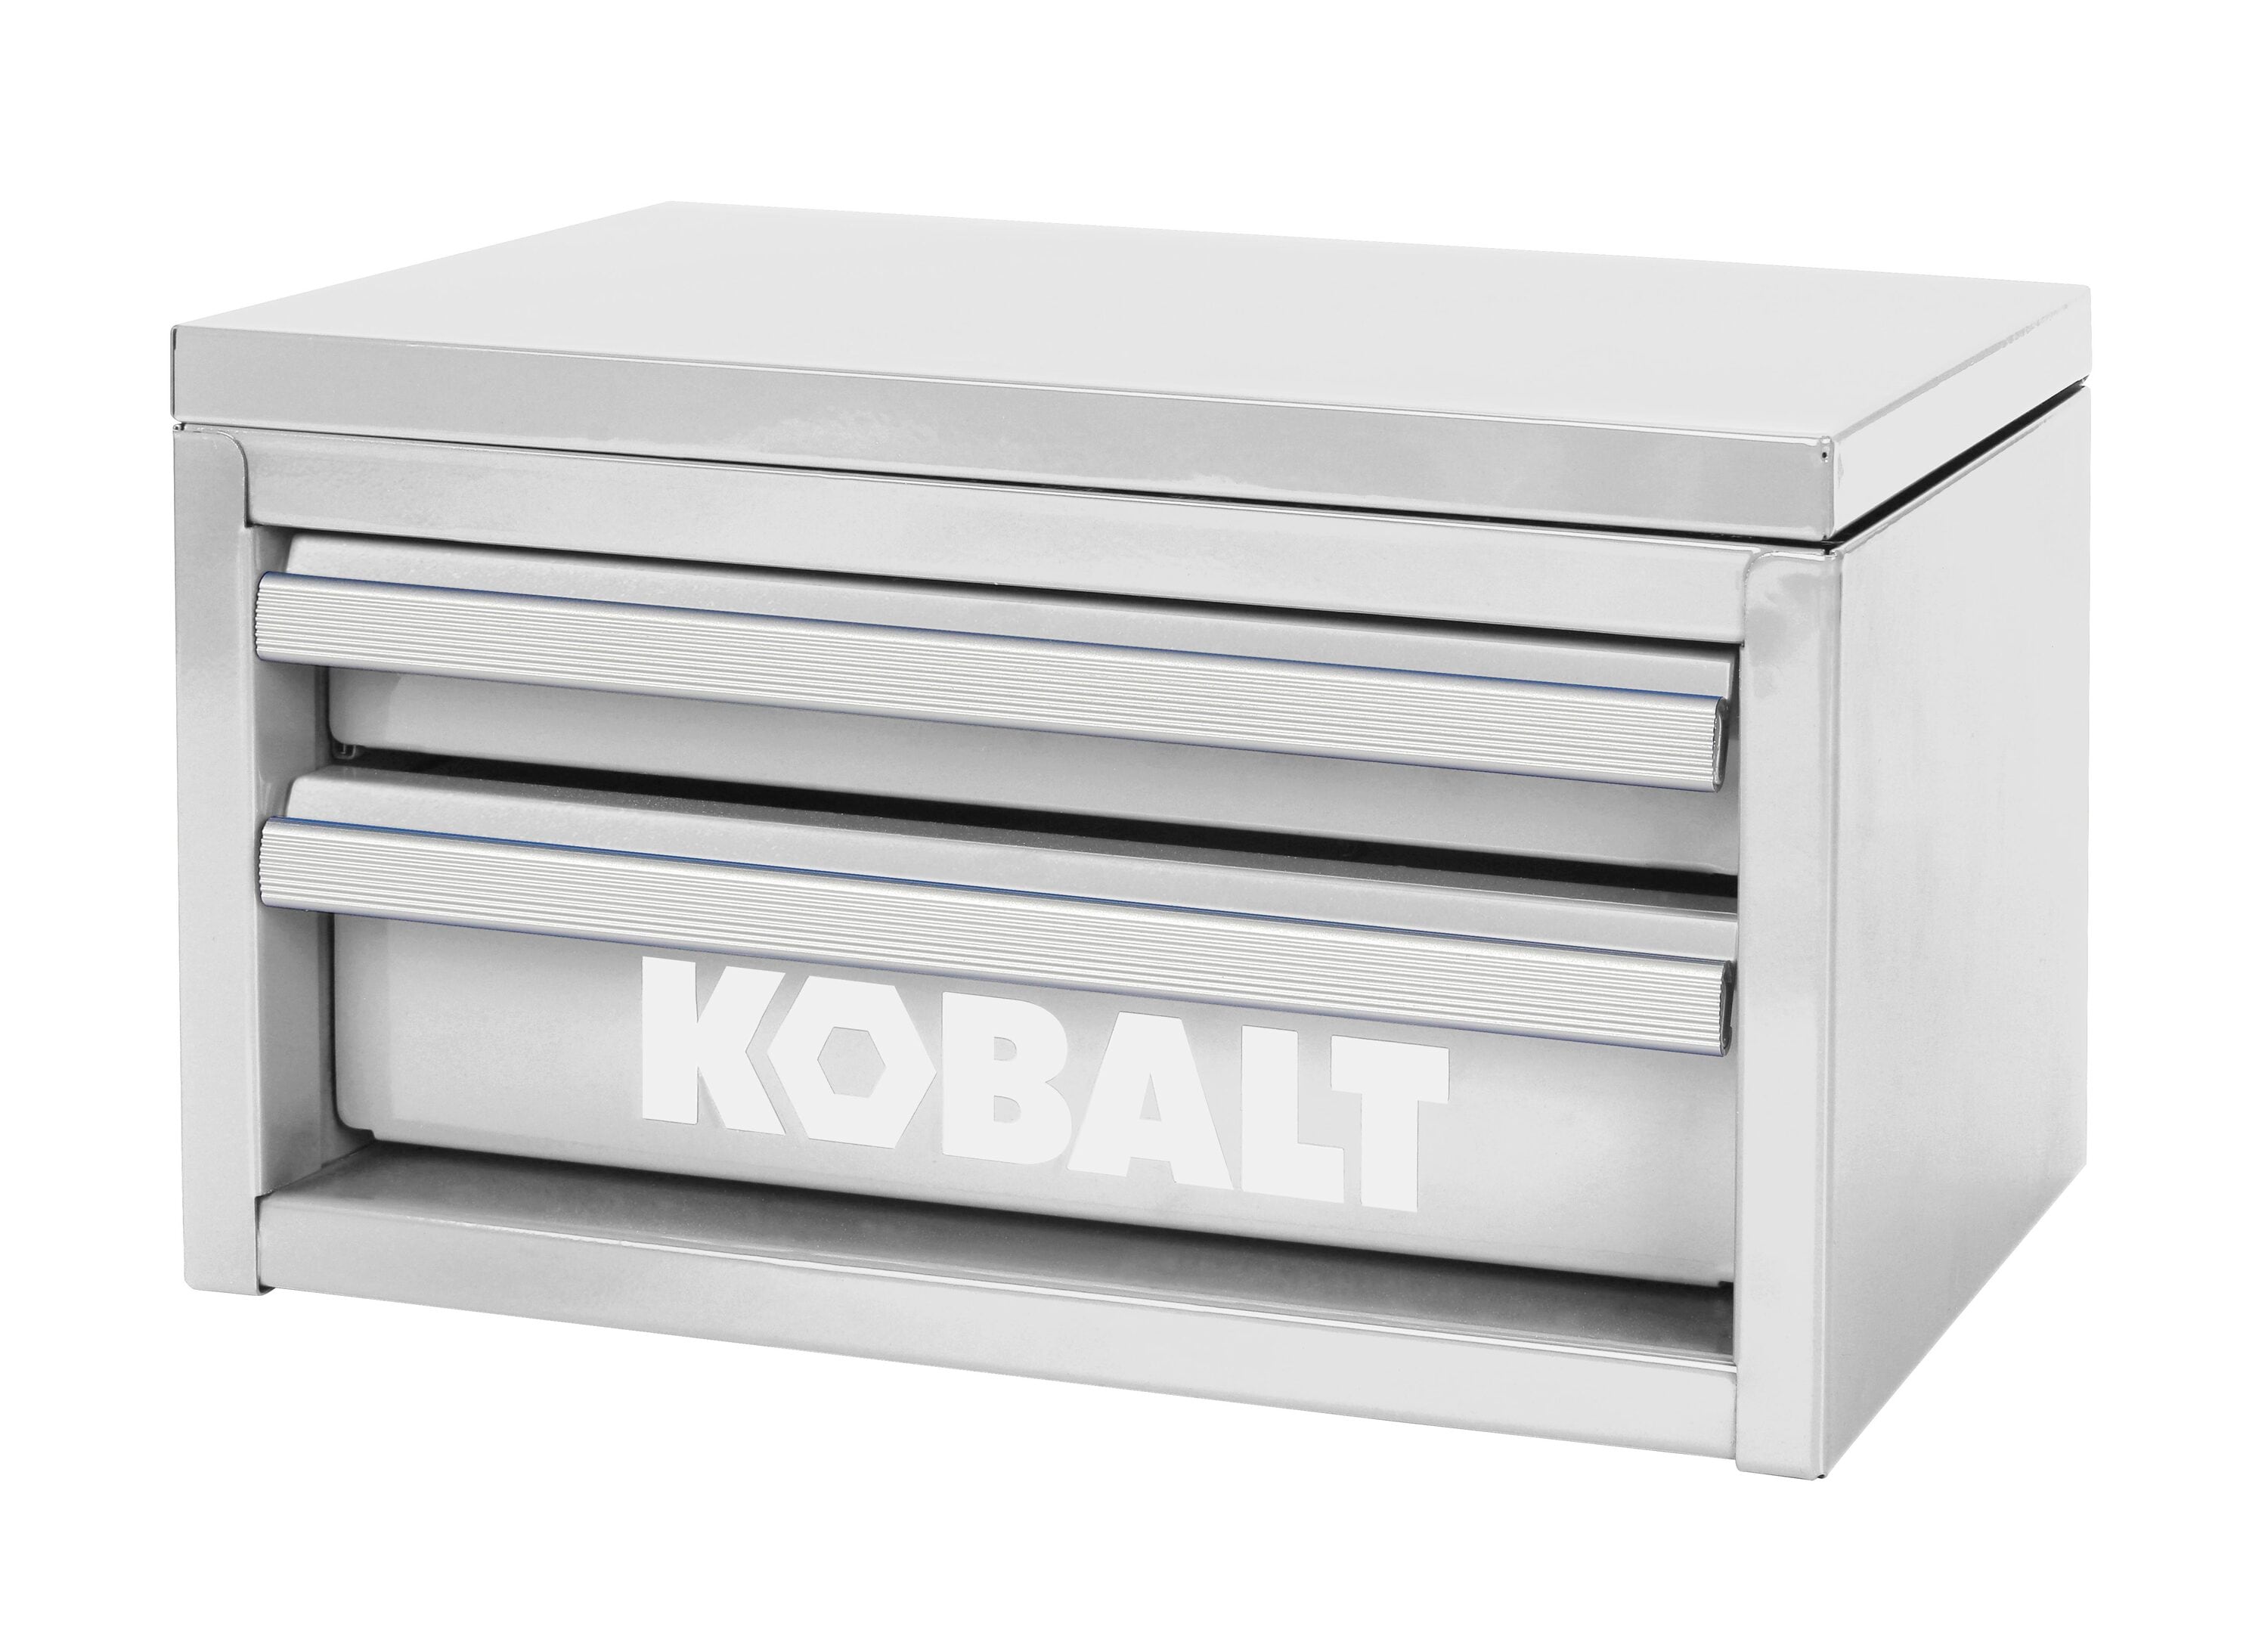 Kobalt Mini Toolbox - White - Tool Boxes, Belts & Storage